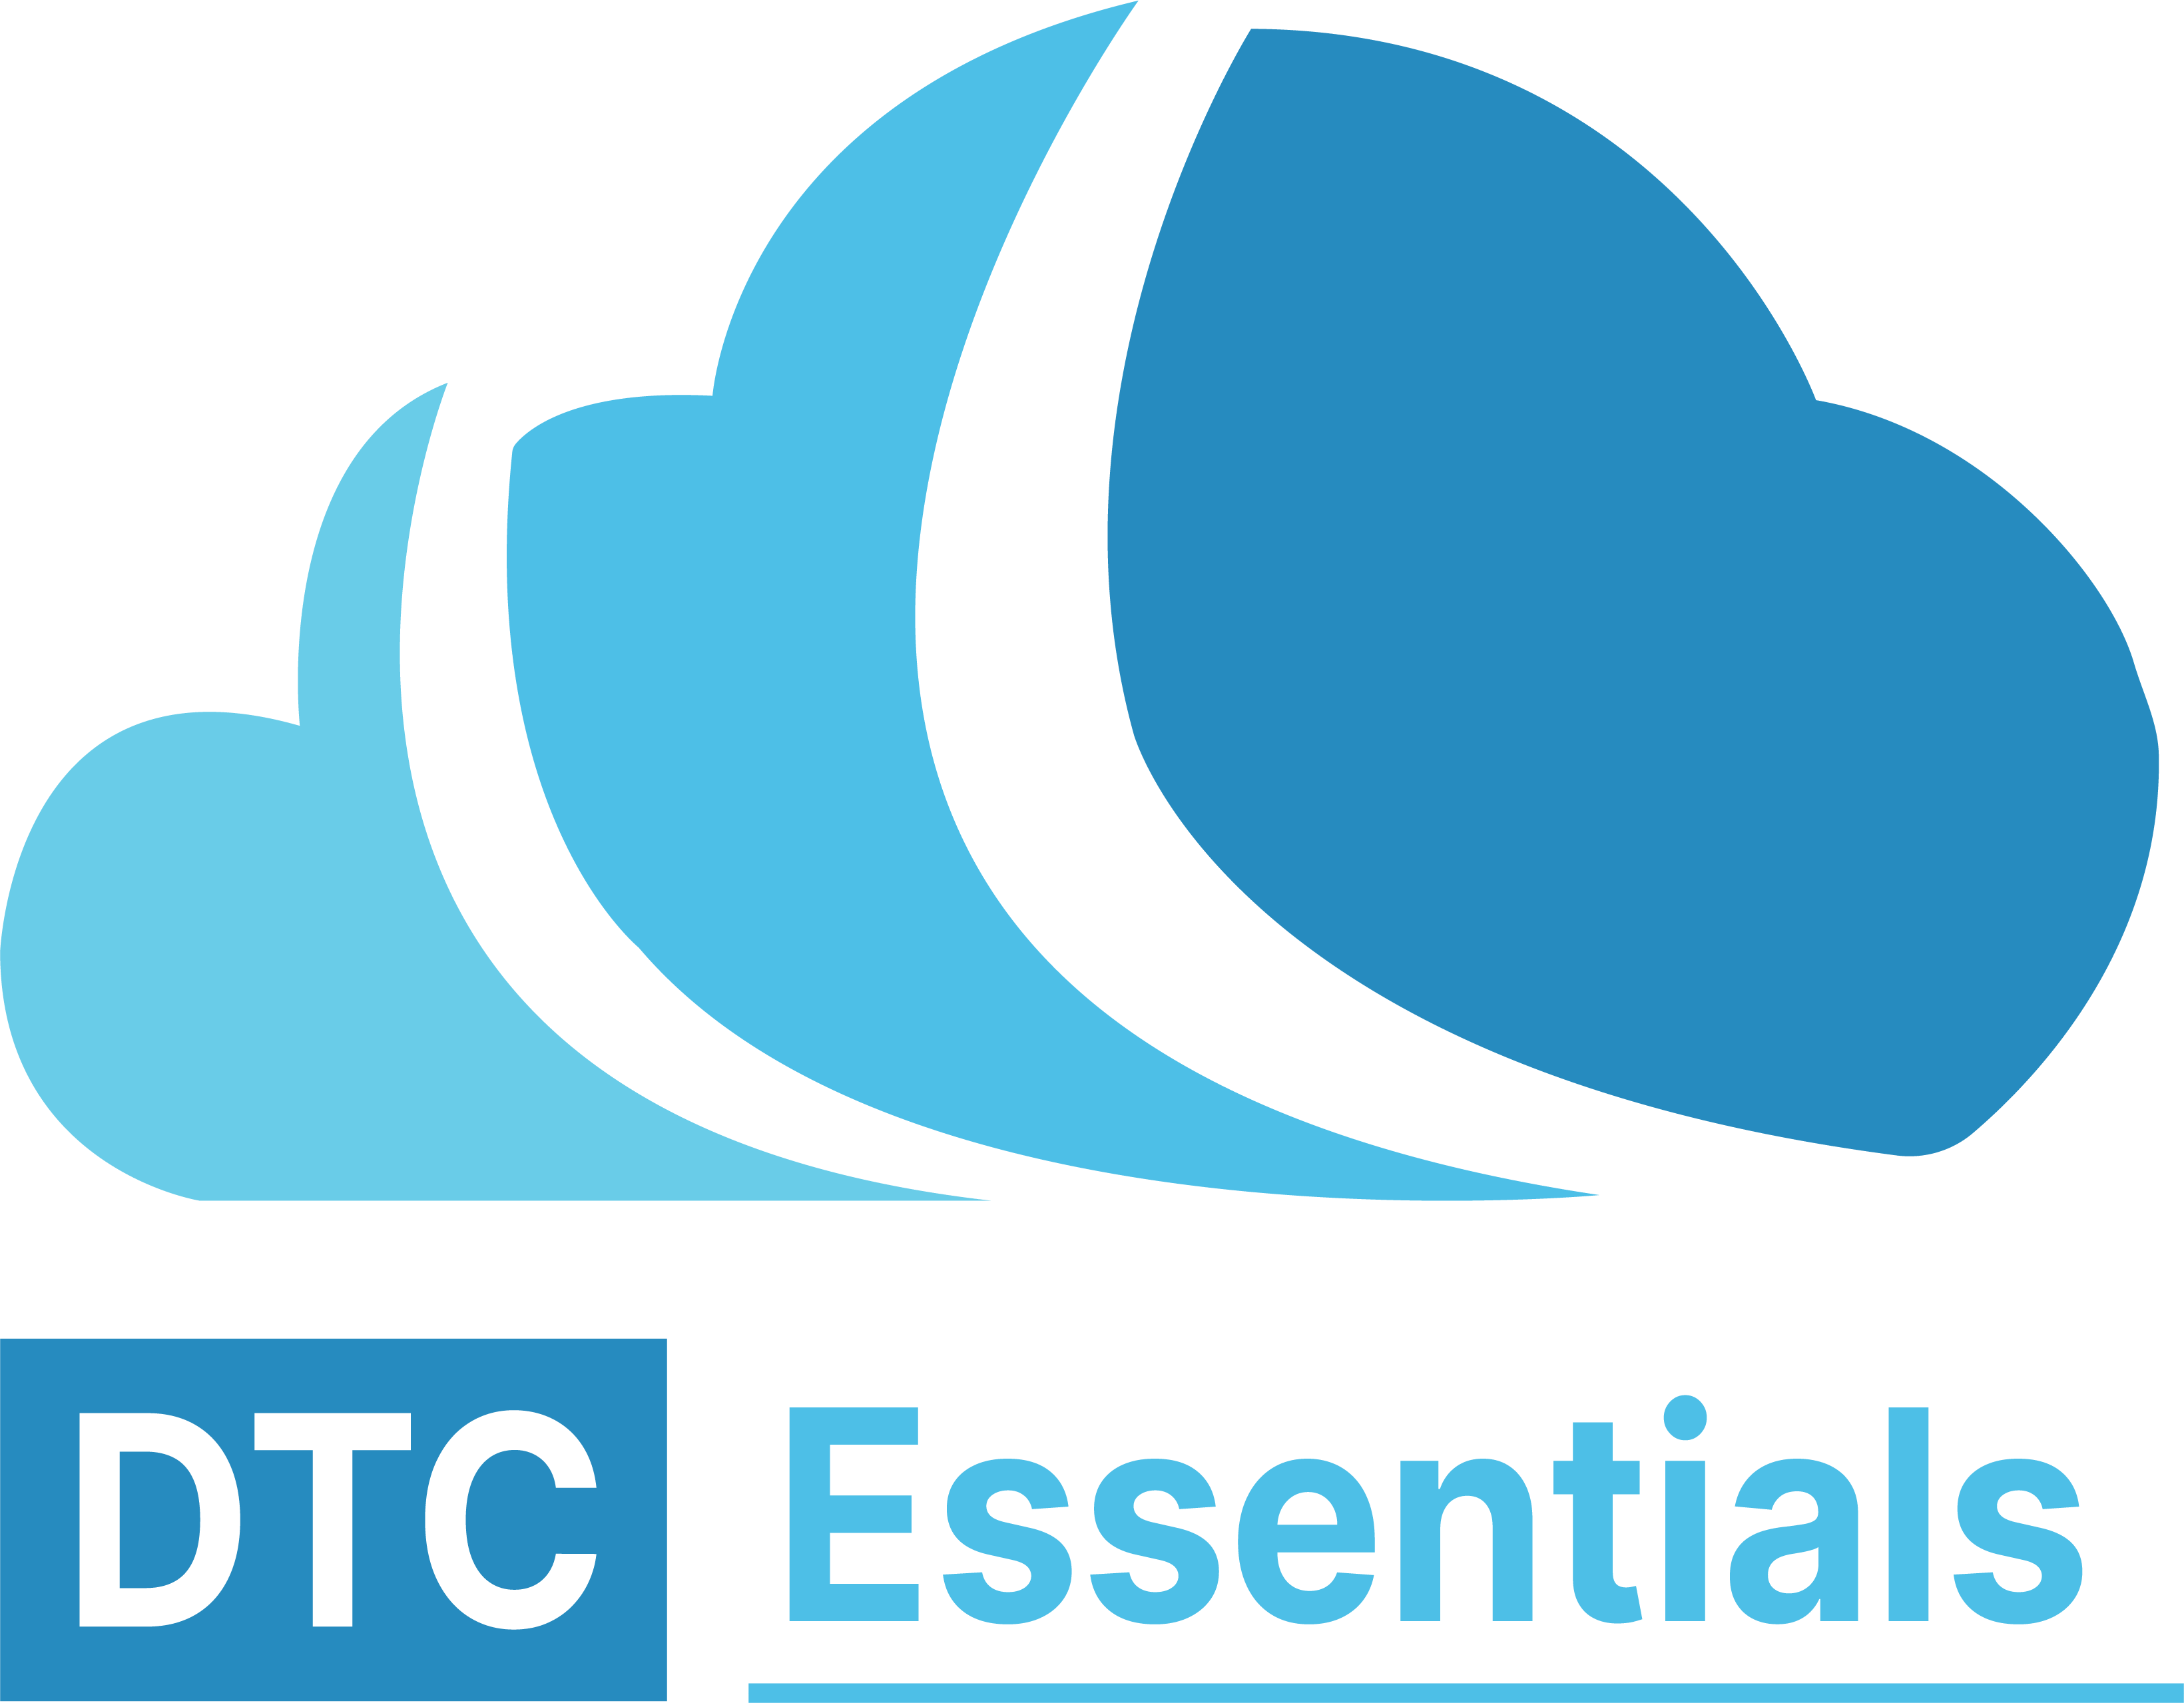 Dtc Essentials logo